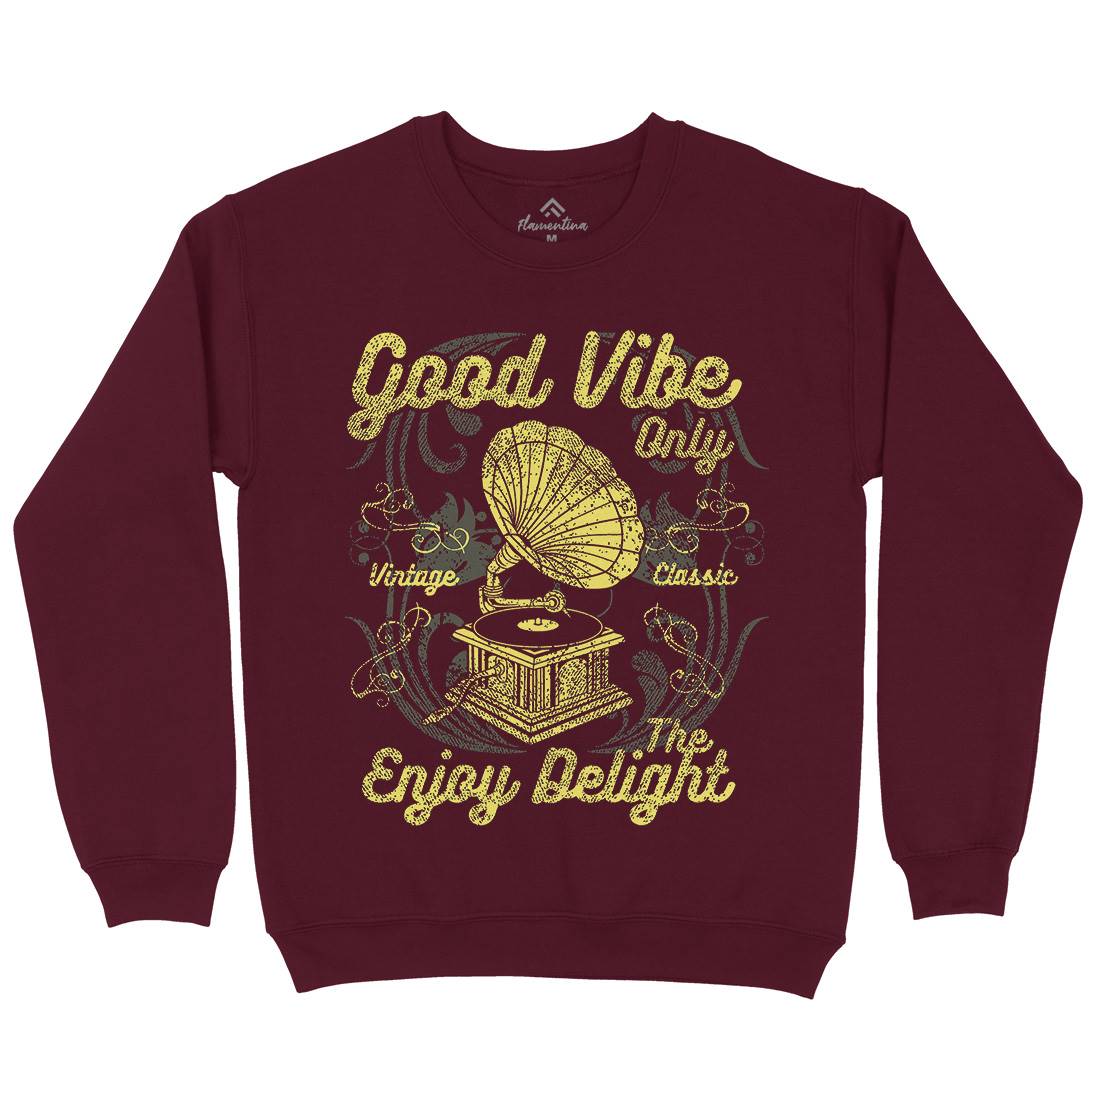 Good Vibe Only Kids Crew Neck Sweatshirt Music A059